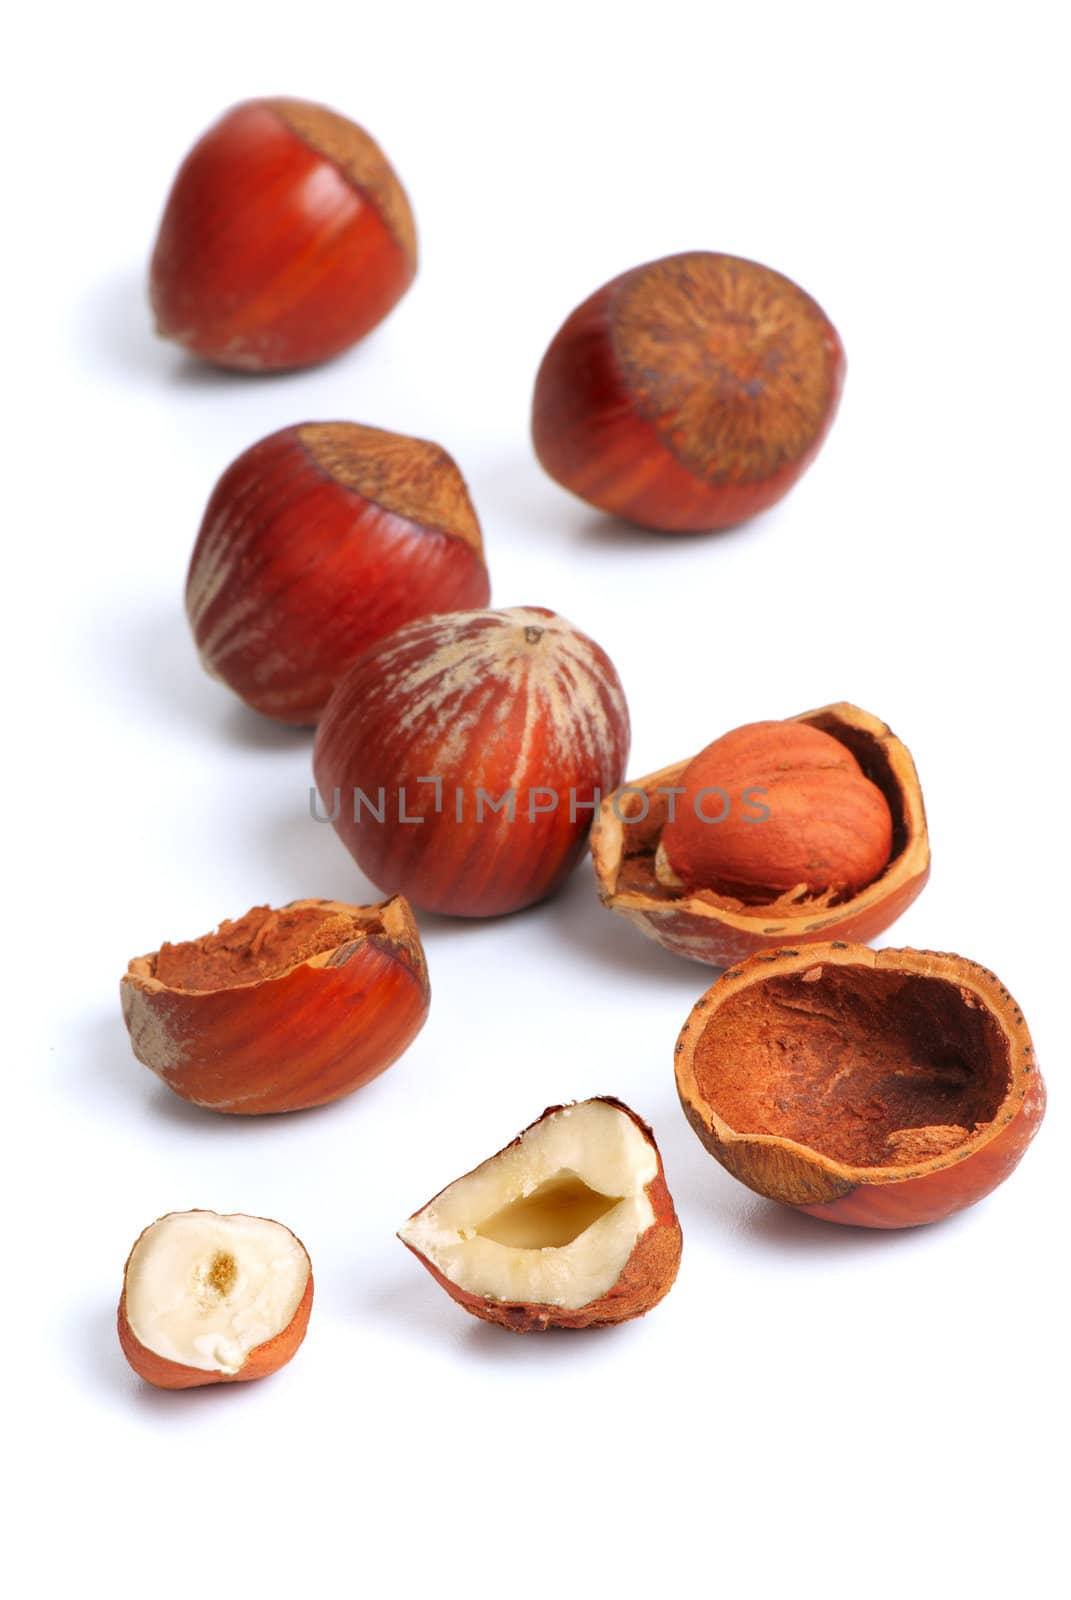 Hazelnuts  on a white background